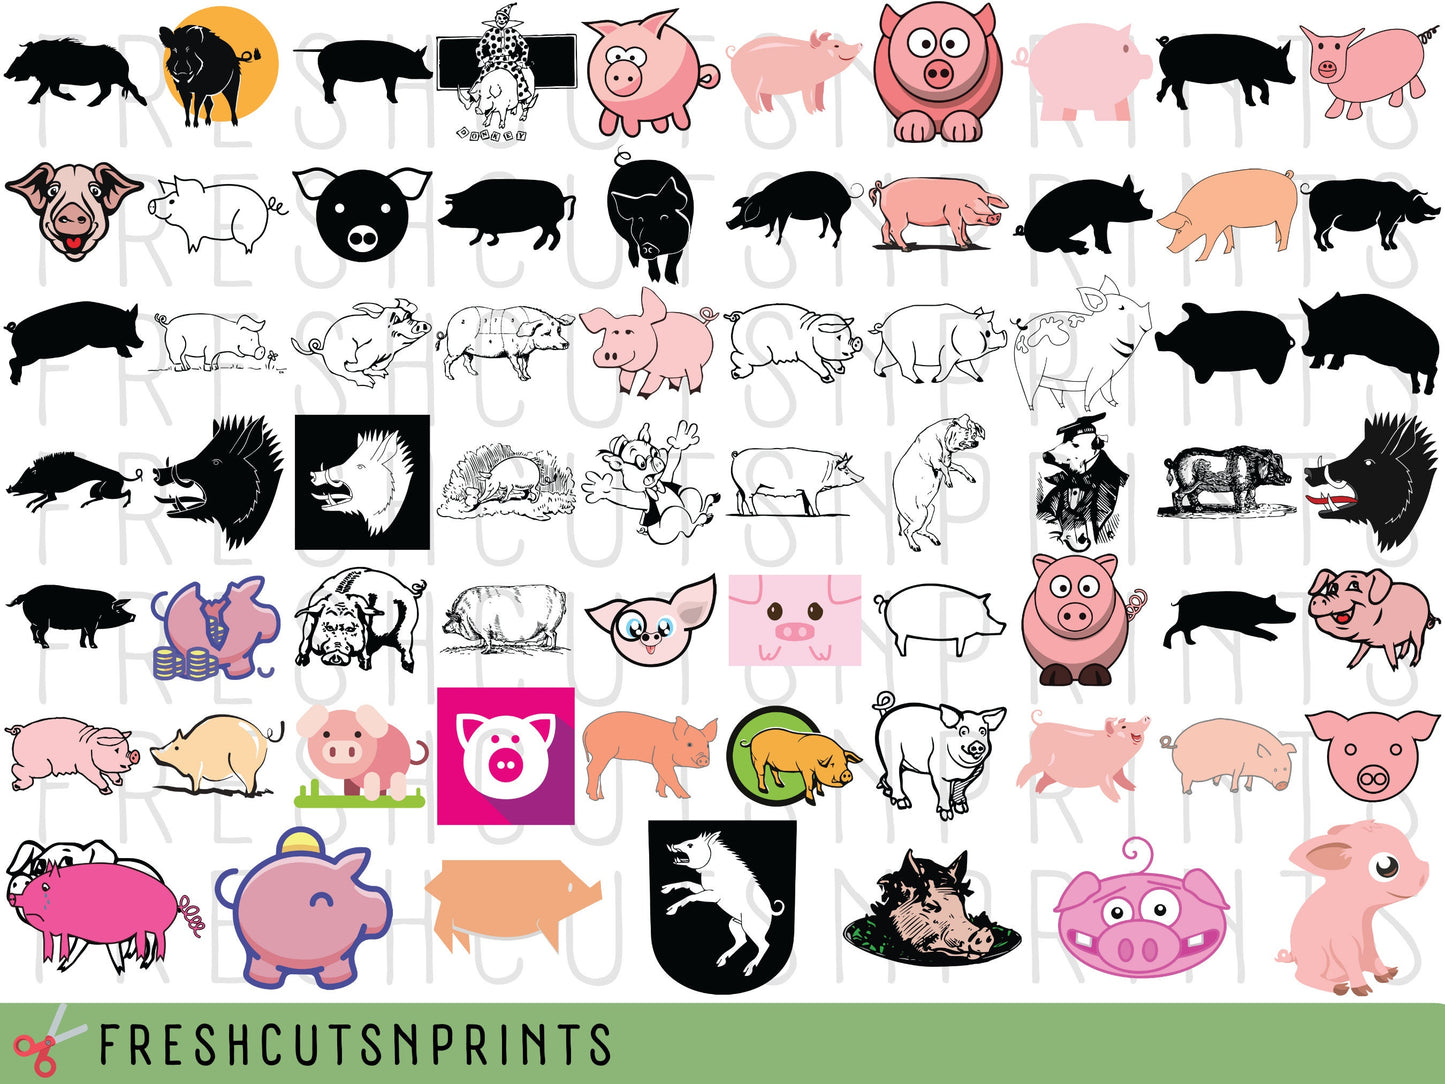 60+ Pig SVG Bundle, Pig vectors, Pig cut files, Pig face svg, Cute pig svg, Pig Clipart, Cartoon pig svg, Pig head svg, Pig silhouette